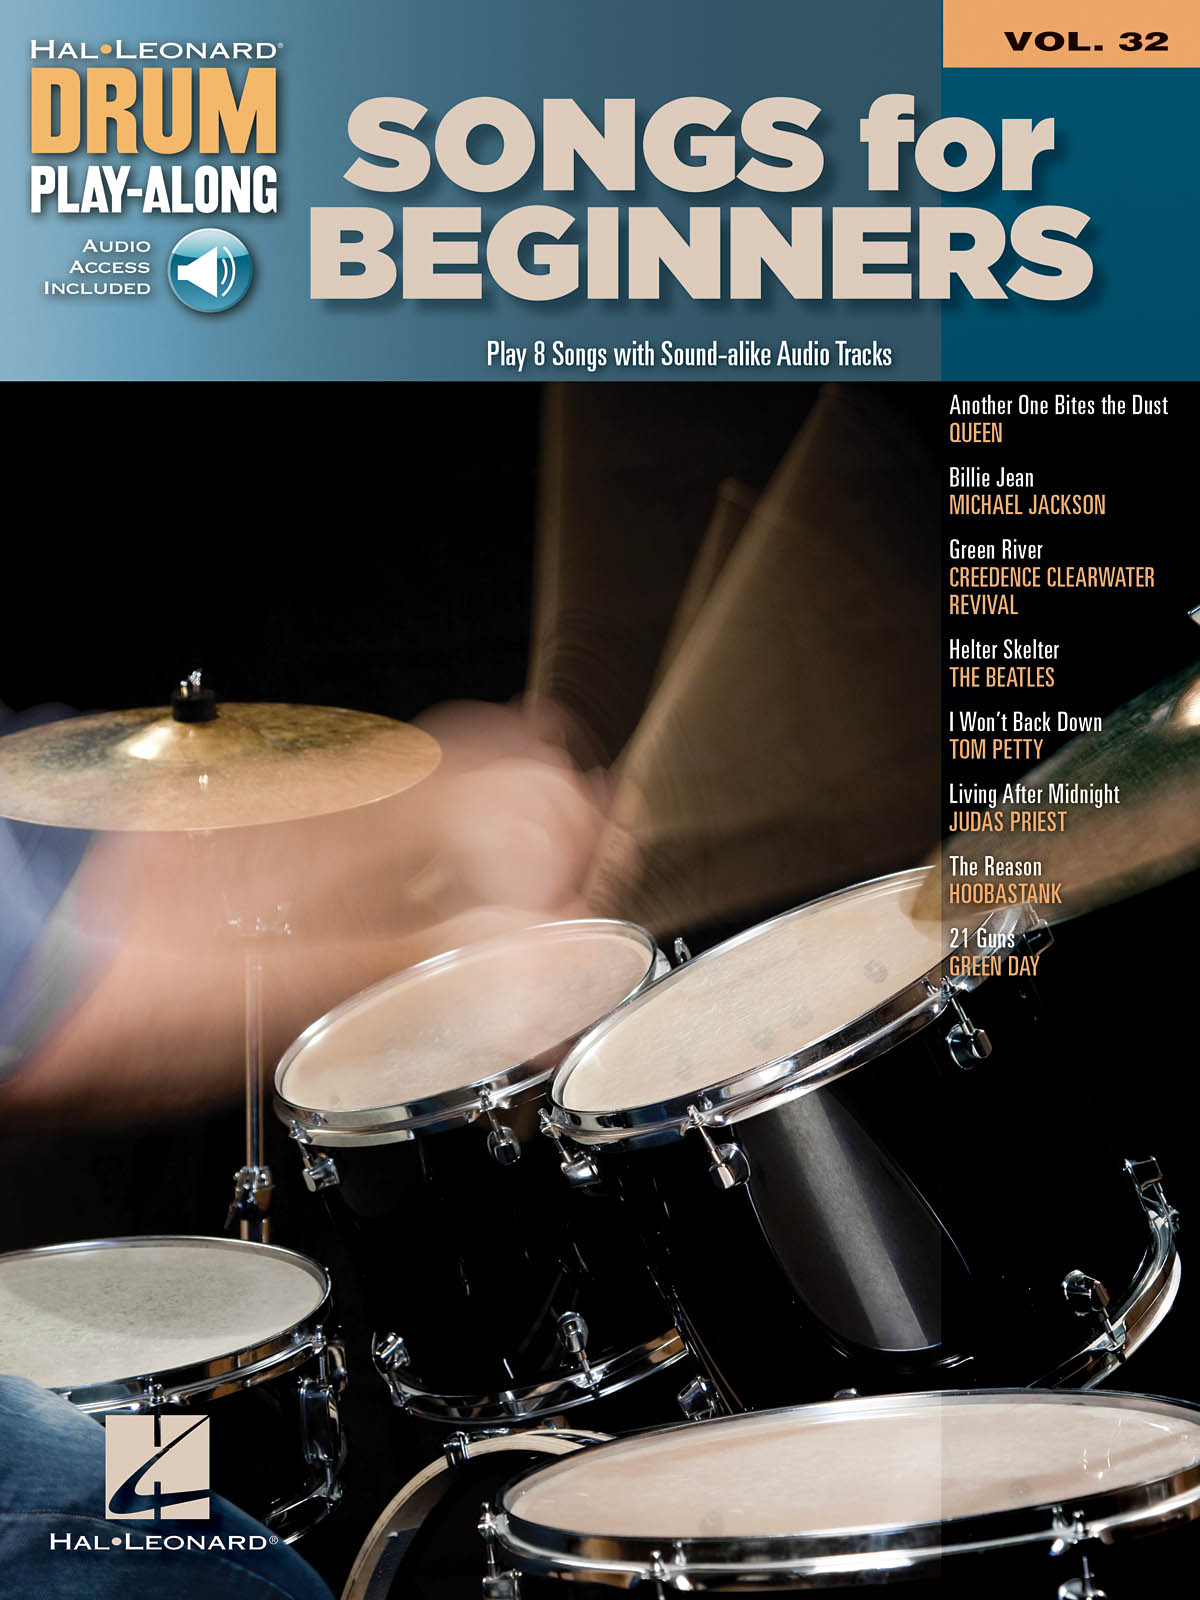 Drum Play-Along Volume 32: Songs for Beginners